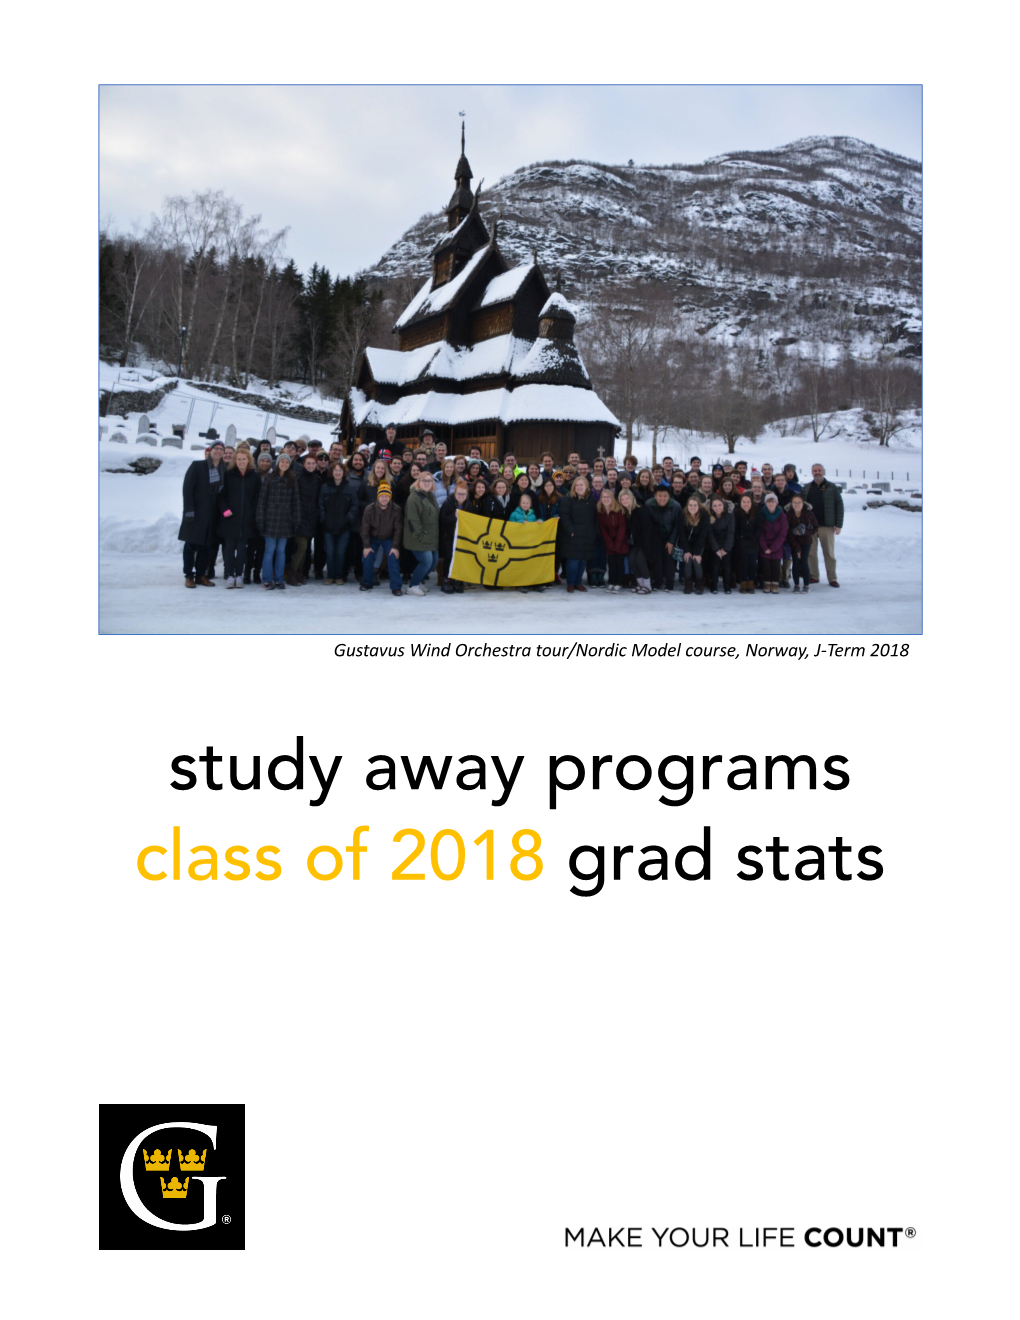 Study Away Programs Class of 2018 Grad Stats Class of 2018 Grad Stats Participation in Study Away Programs